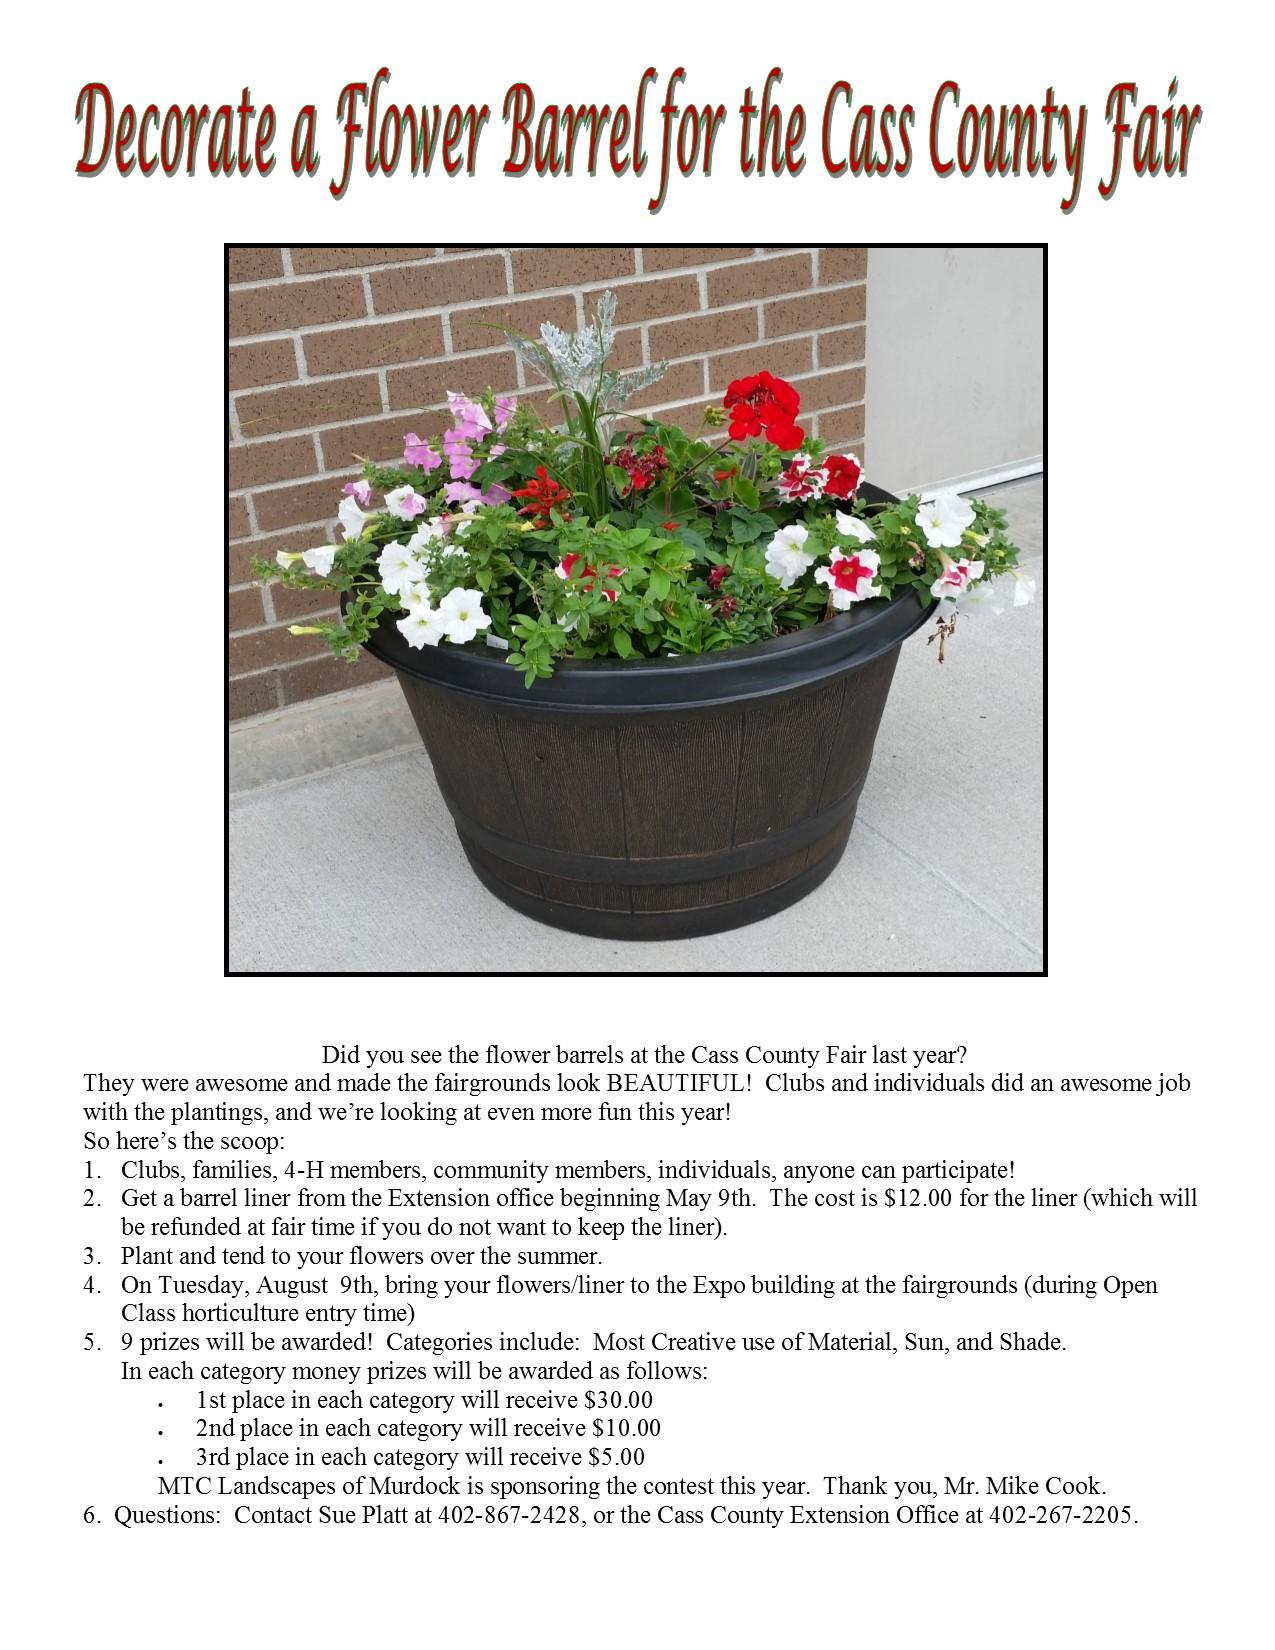 2016 Decorate a flower barrel for the Cass County Fair